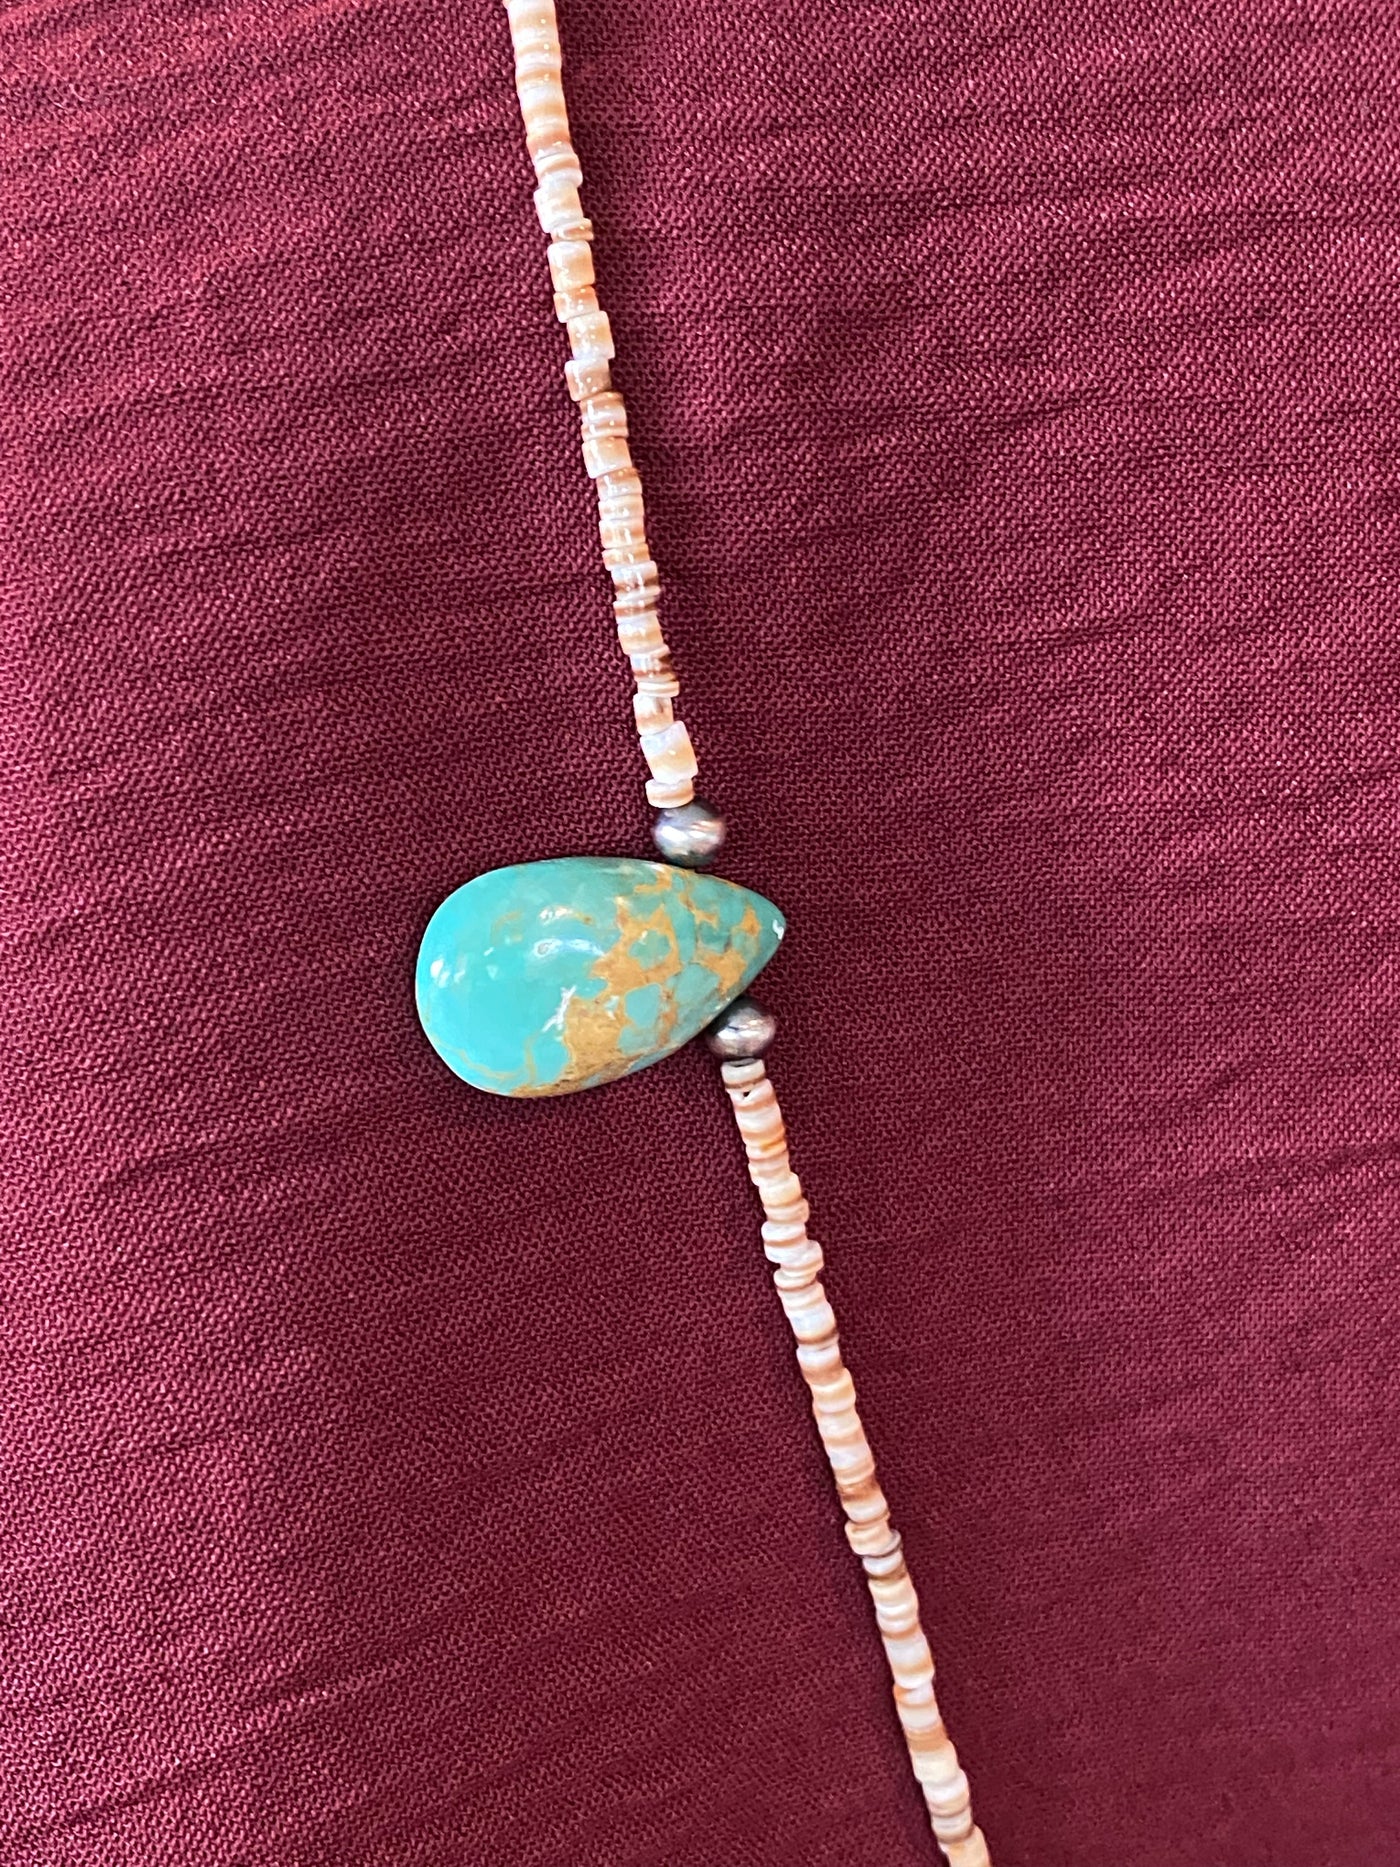 The San Saba Necklace